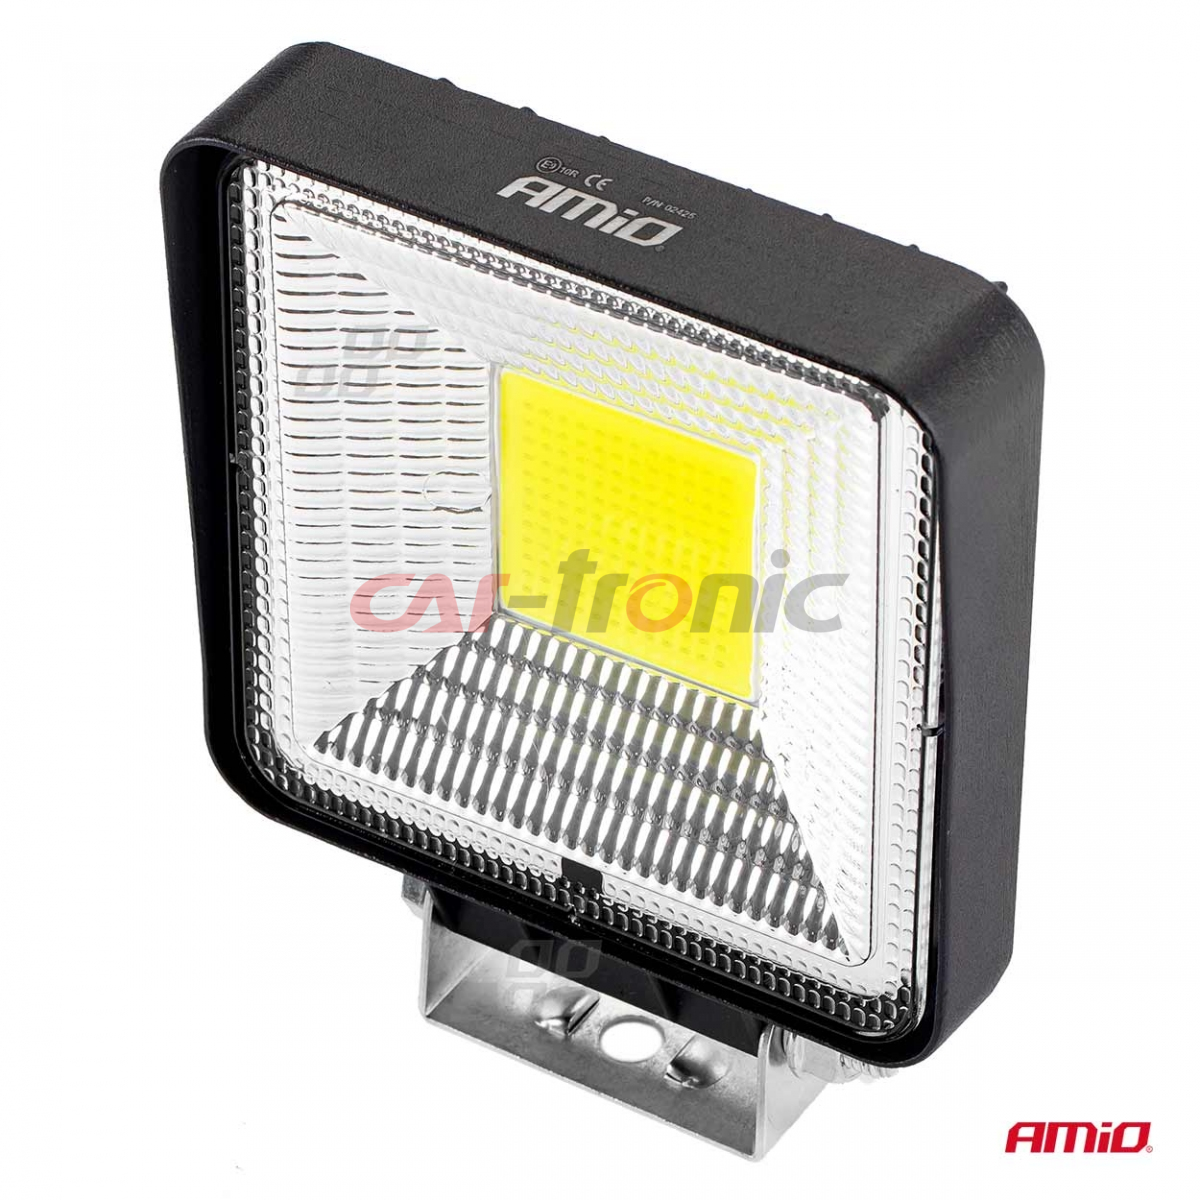 Lampa robocza halogen LED szperacz AWL11 AMIO-02425